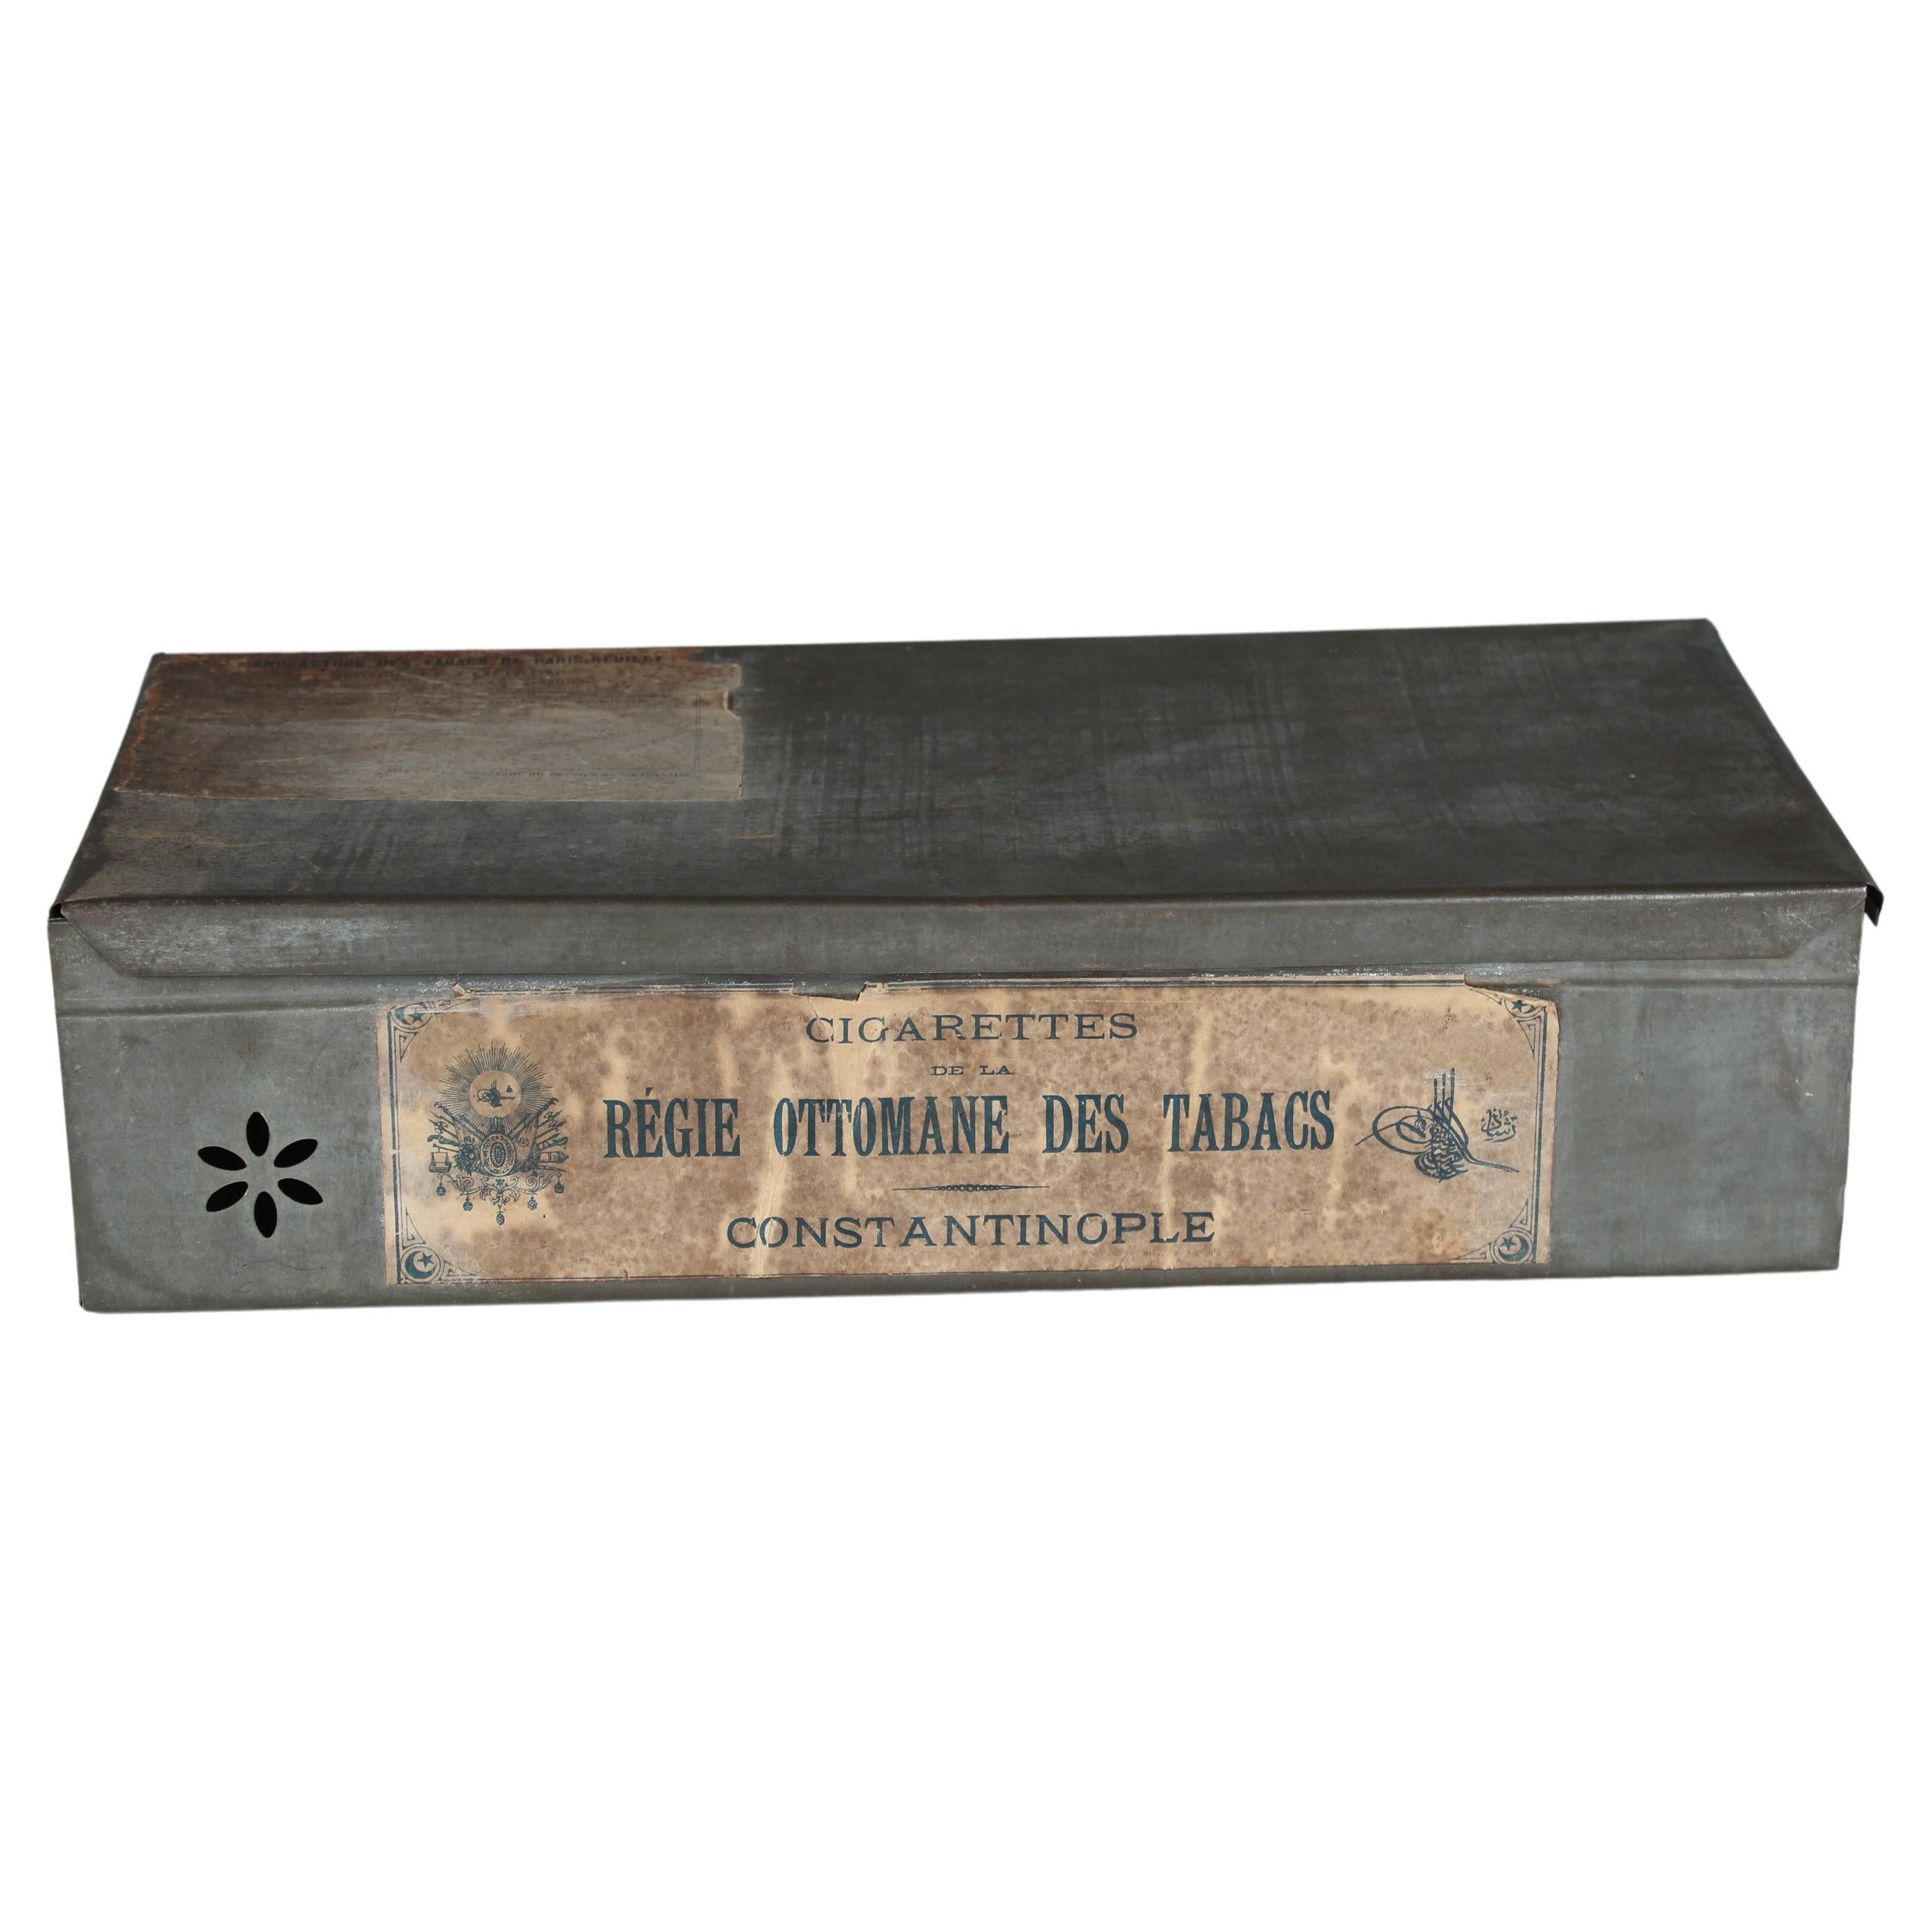 Large Antique Tobacco Tin Box, 1930s 1940s